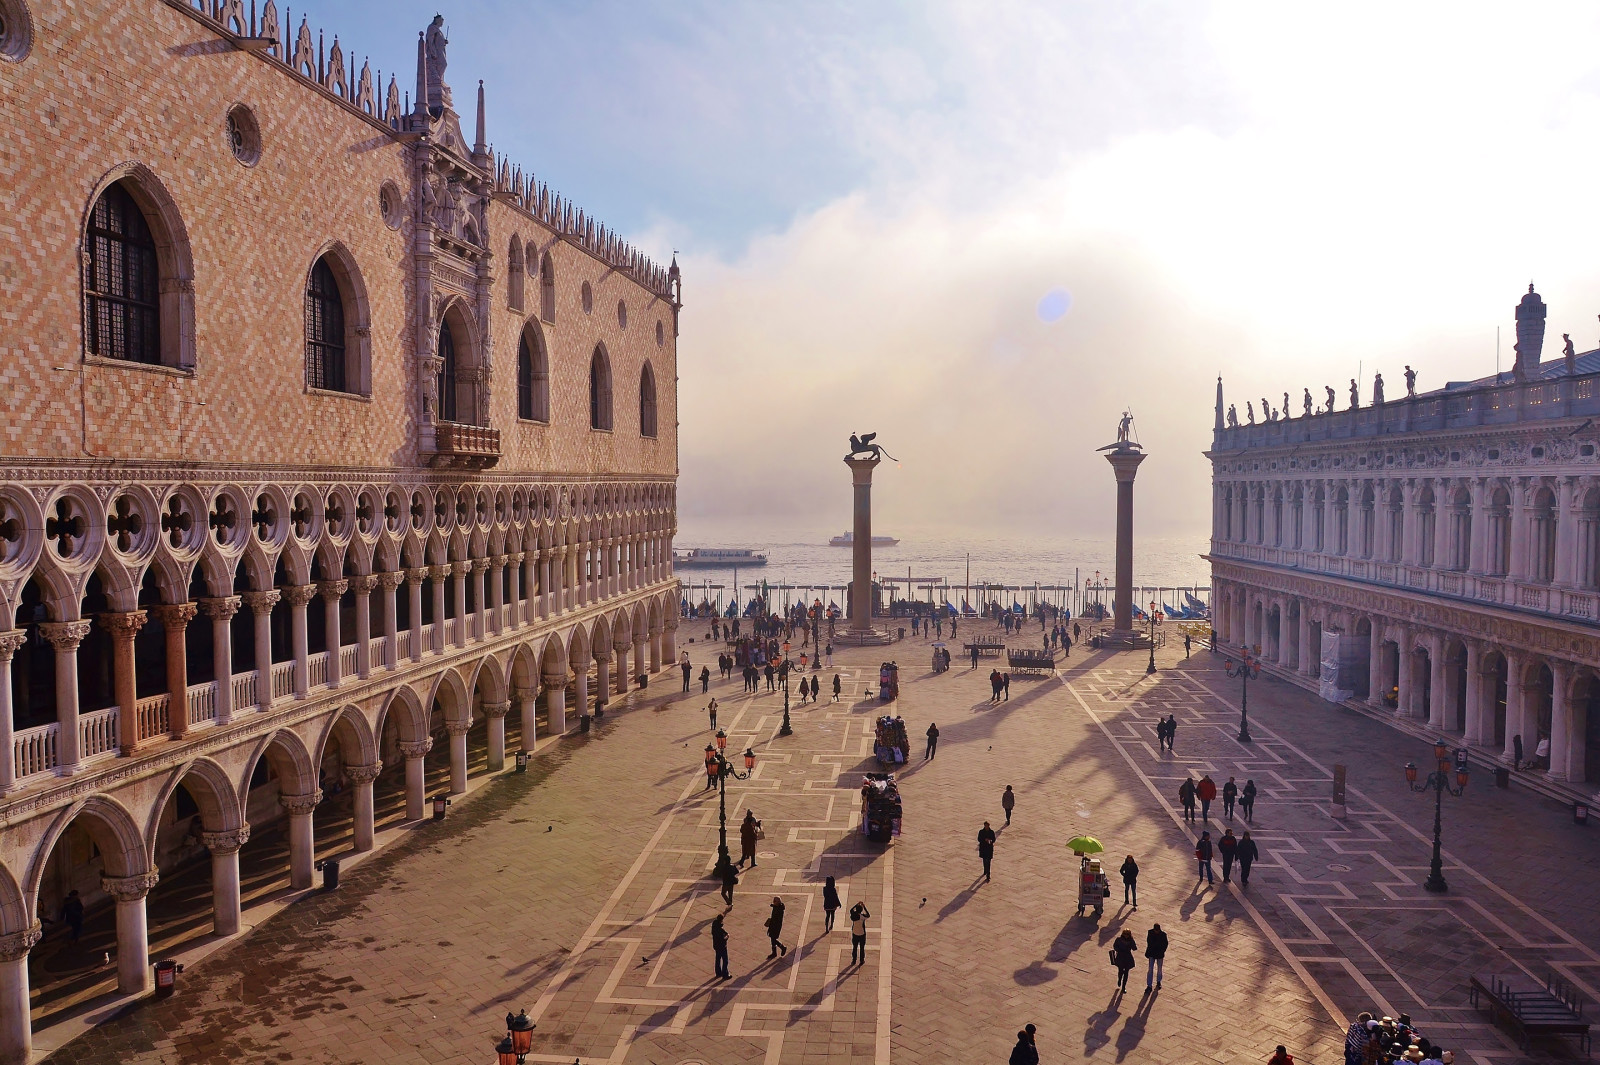 Italia, kolom, Venesia, Piazzetta, Istana Doge, singa dari tanda St.